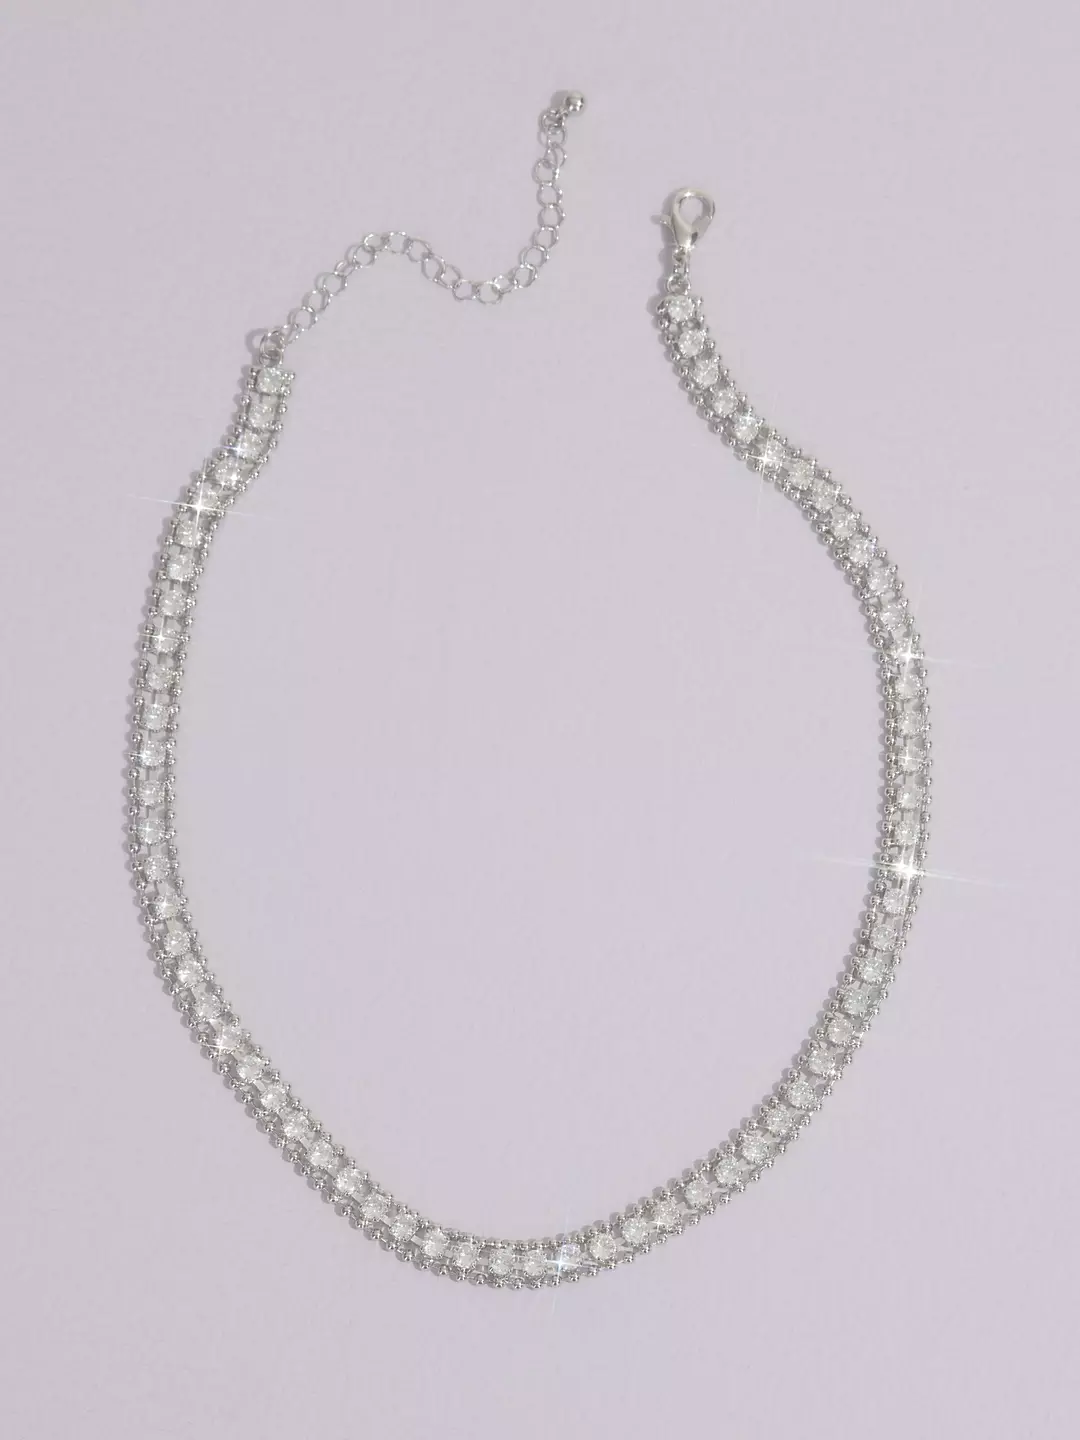 Rhinestone Crystal Collar Necklace Image